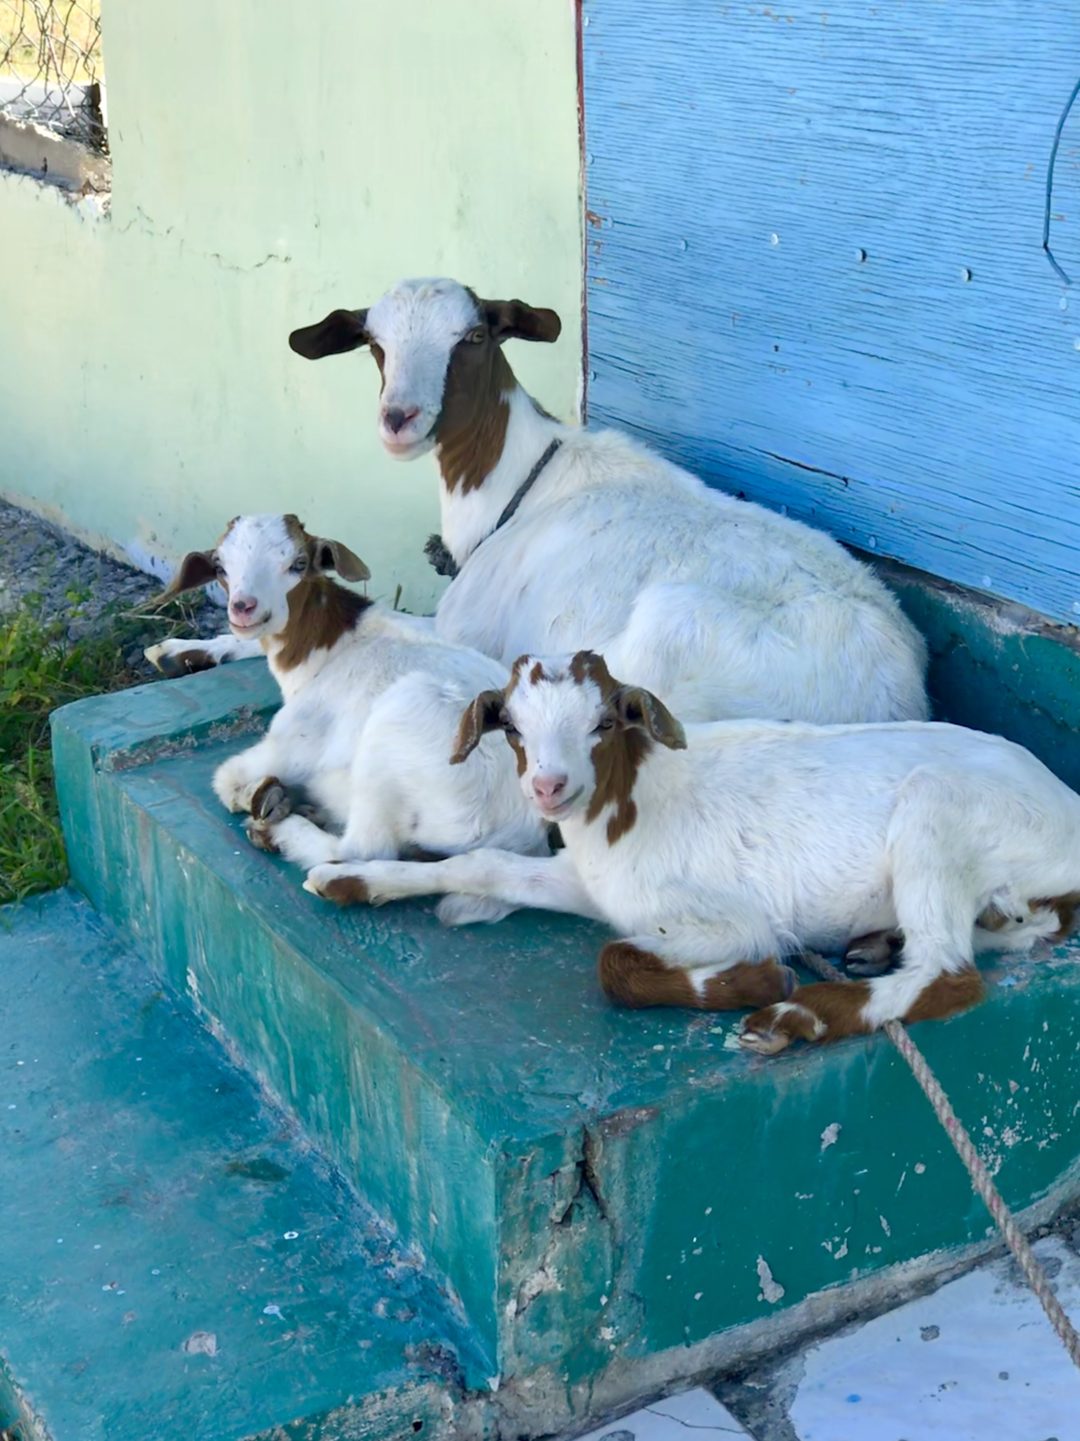 Goats in Jamaica